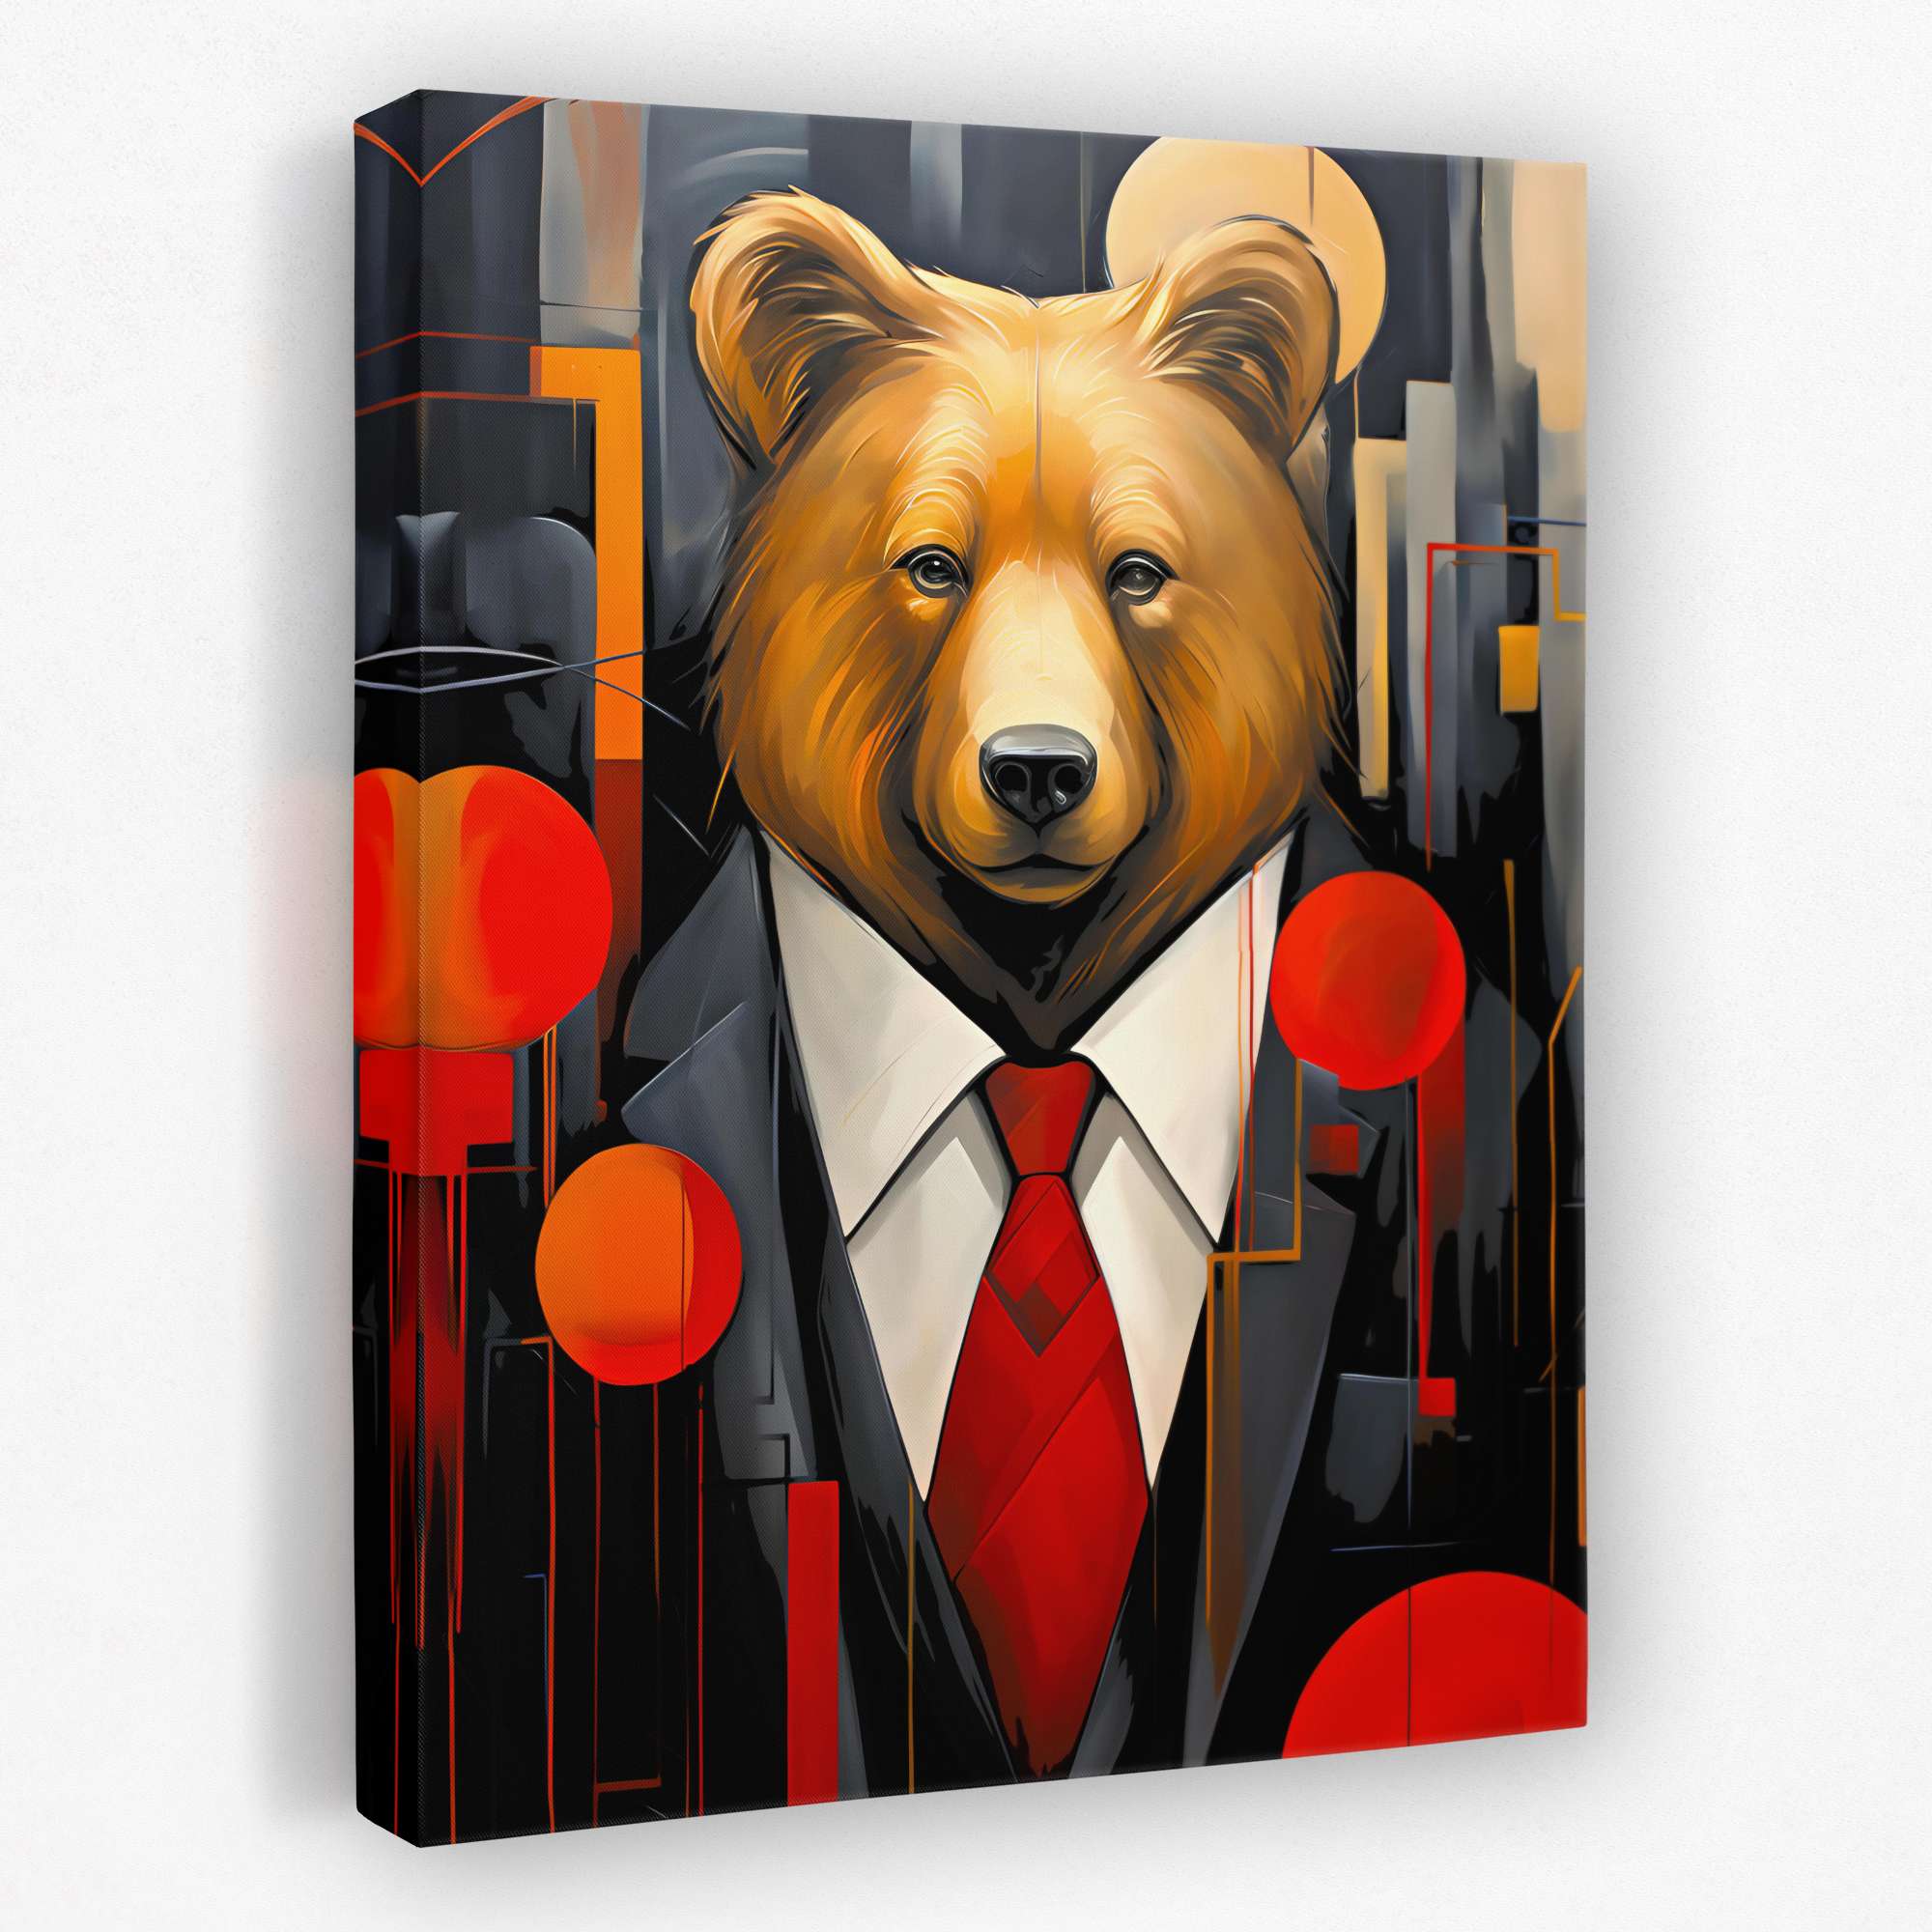 Stock Bear - Luxury Wall Art